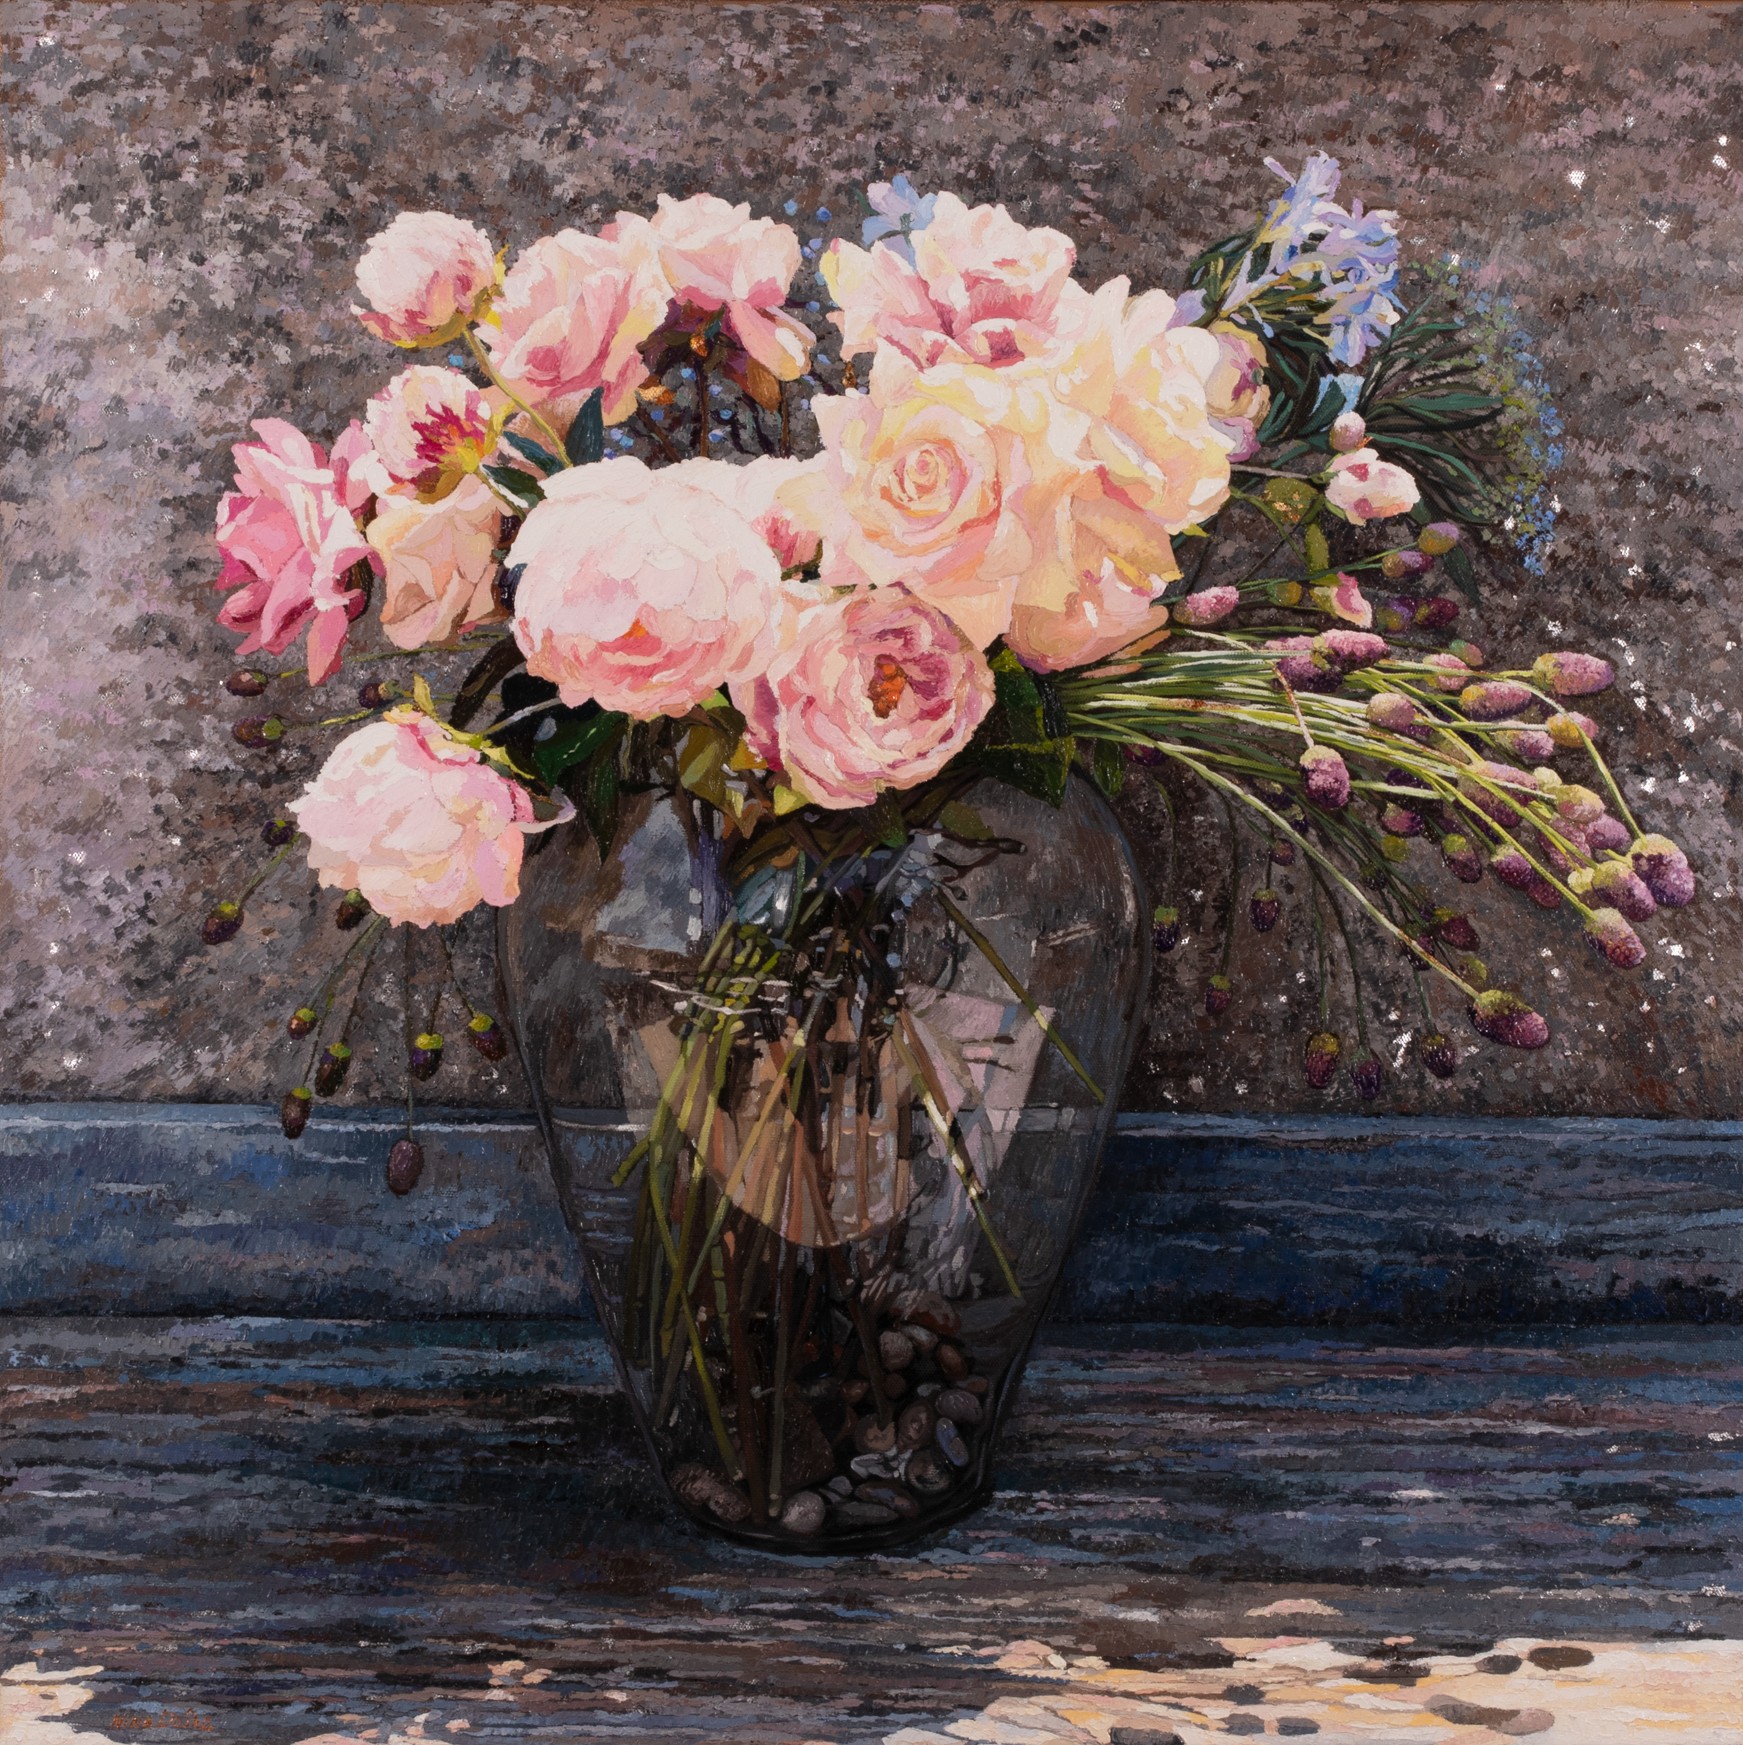 Nina DoShe "Flowers and Glass"